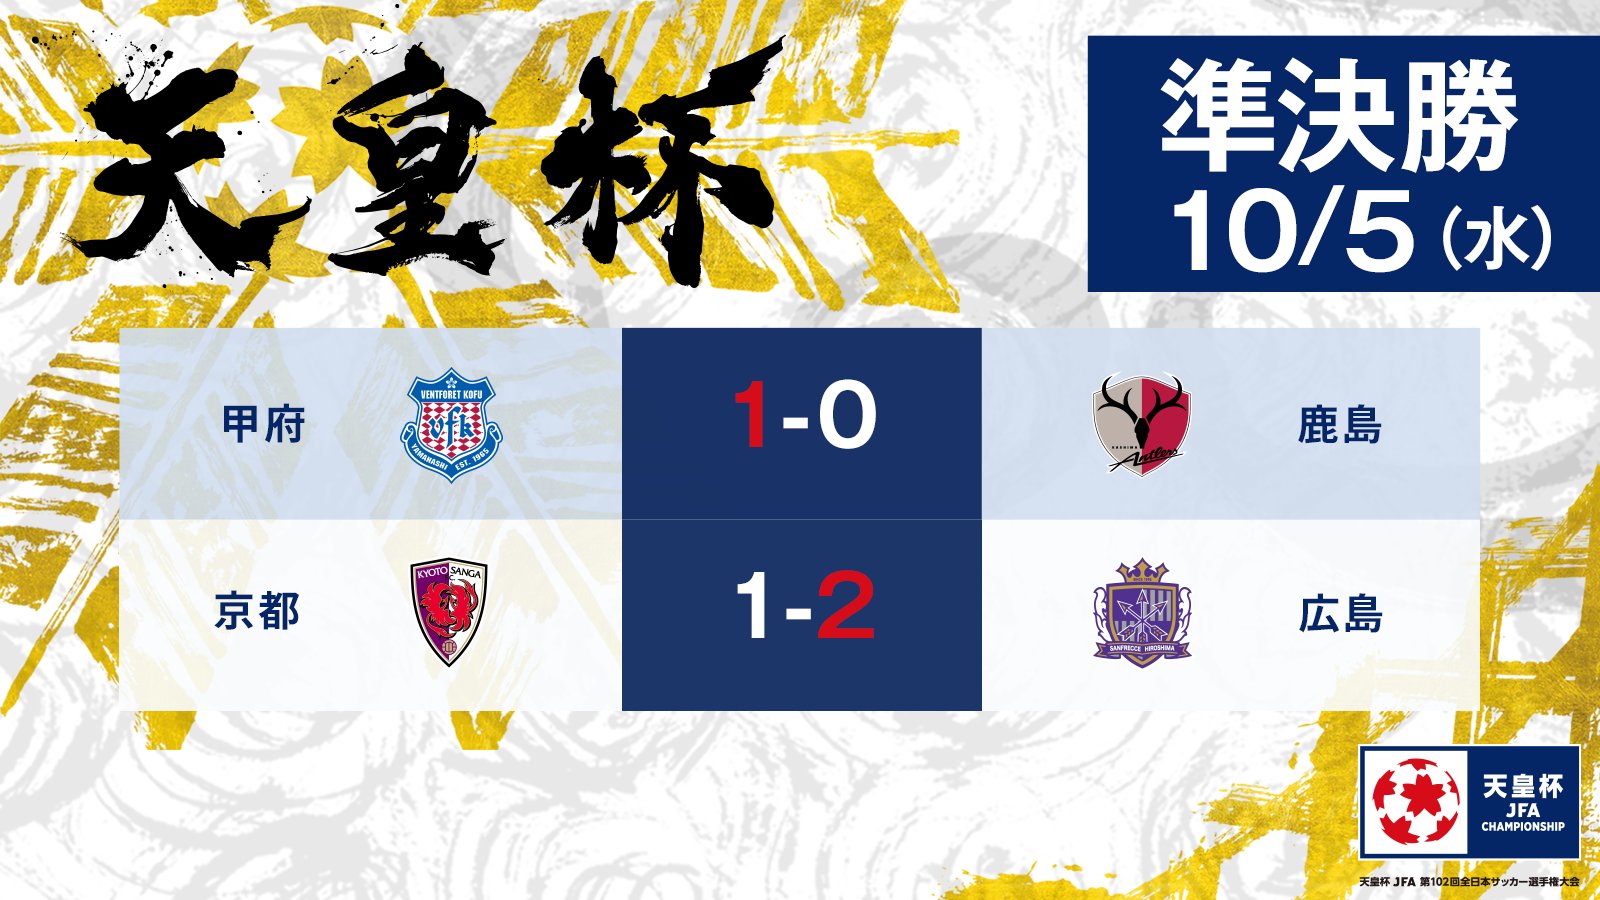 天皇杯 Jfa 第102回全日本サッカー選手権大会 10 16 日 決勝開催 Jfa Tennouhai Twitter